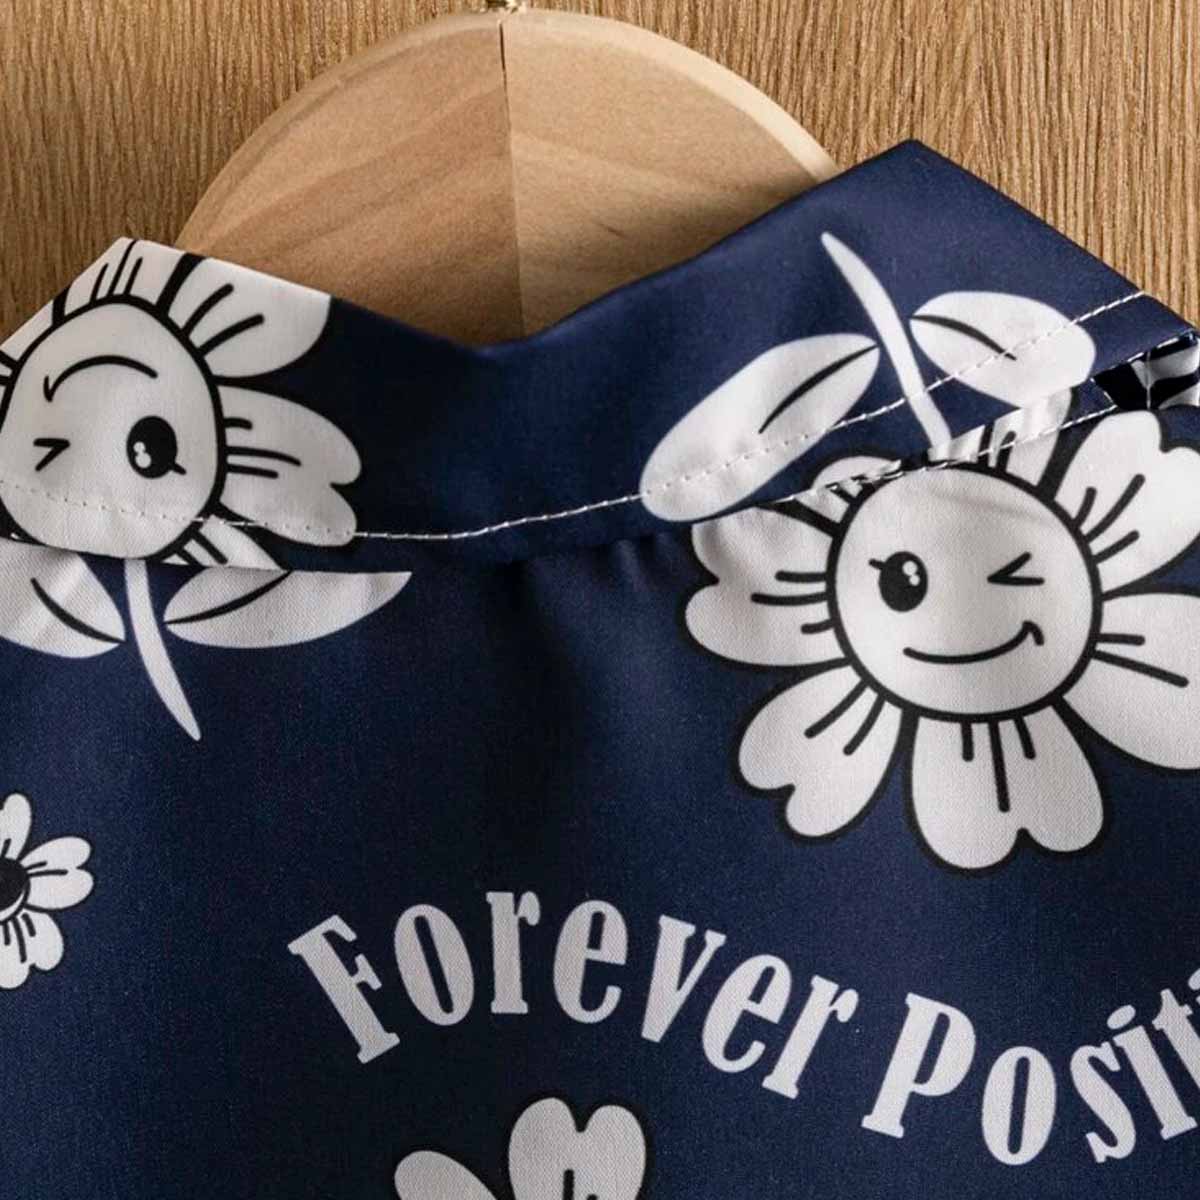 Venutaloza Forever Floral print Graphic Designer Button Front Shirt (Combo Pack Of 2) For Boy.